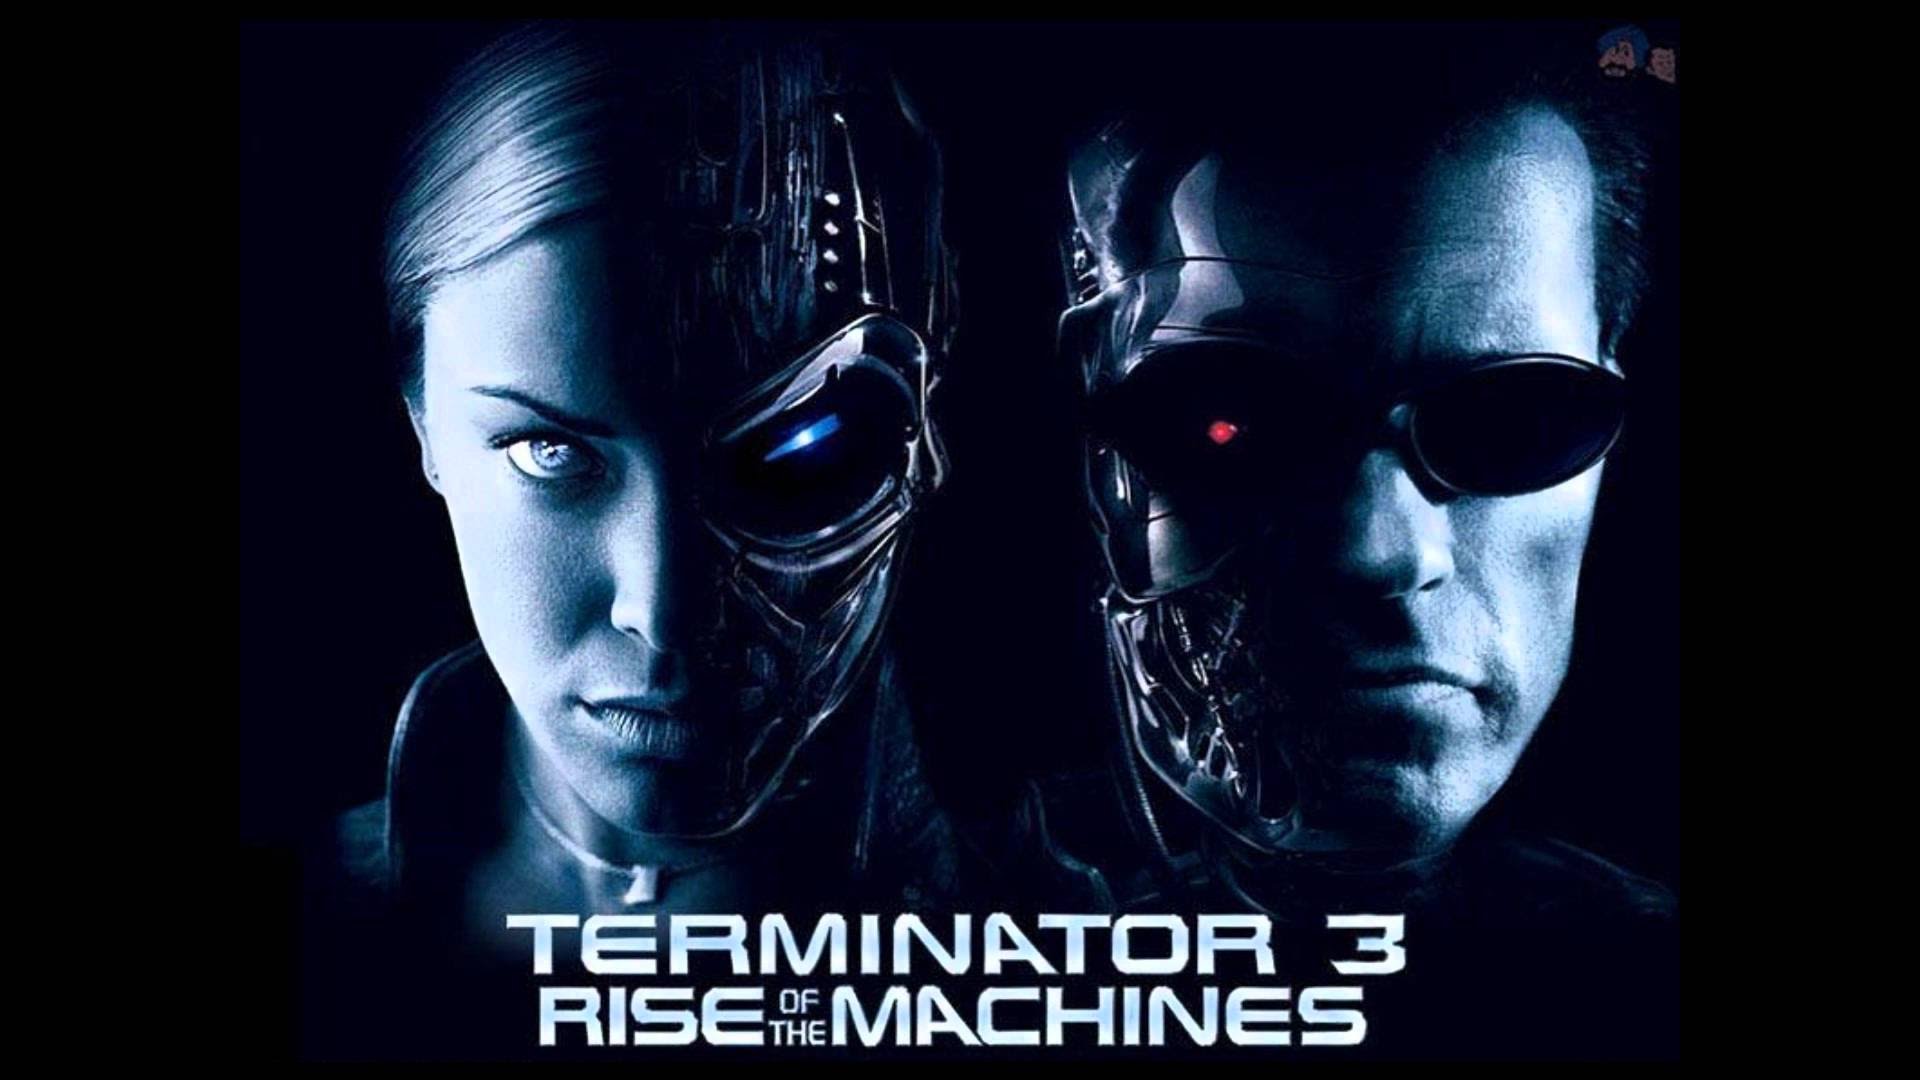 terminator 3: rise of the machines cast